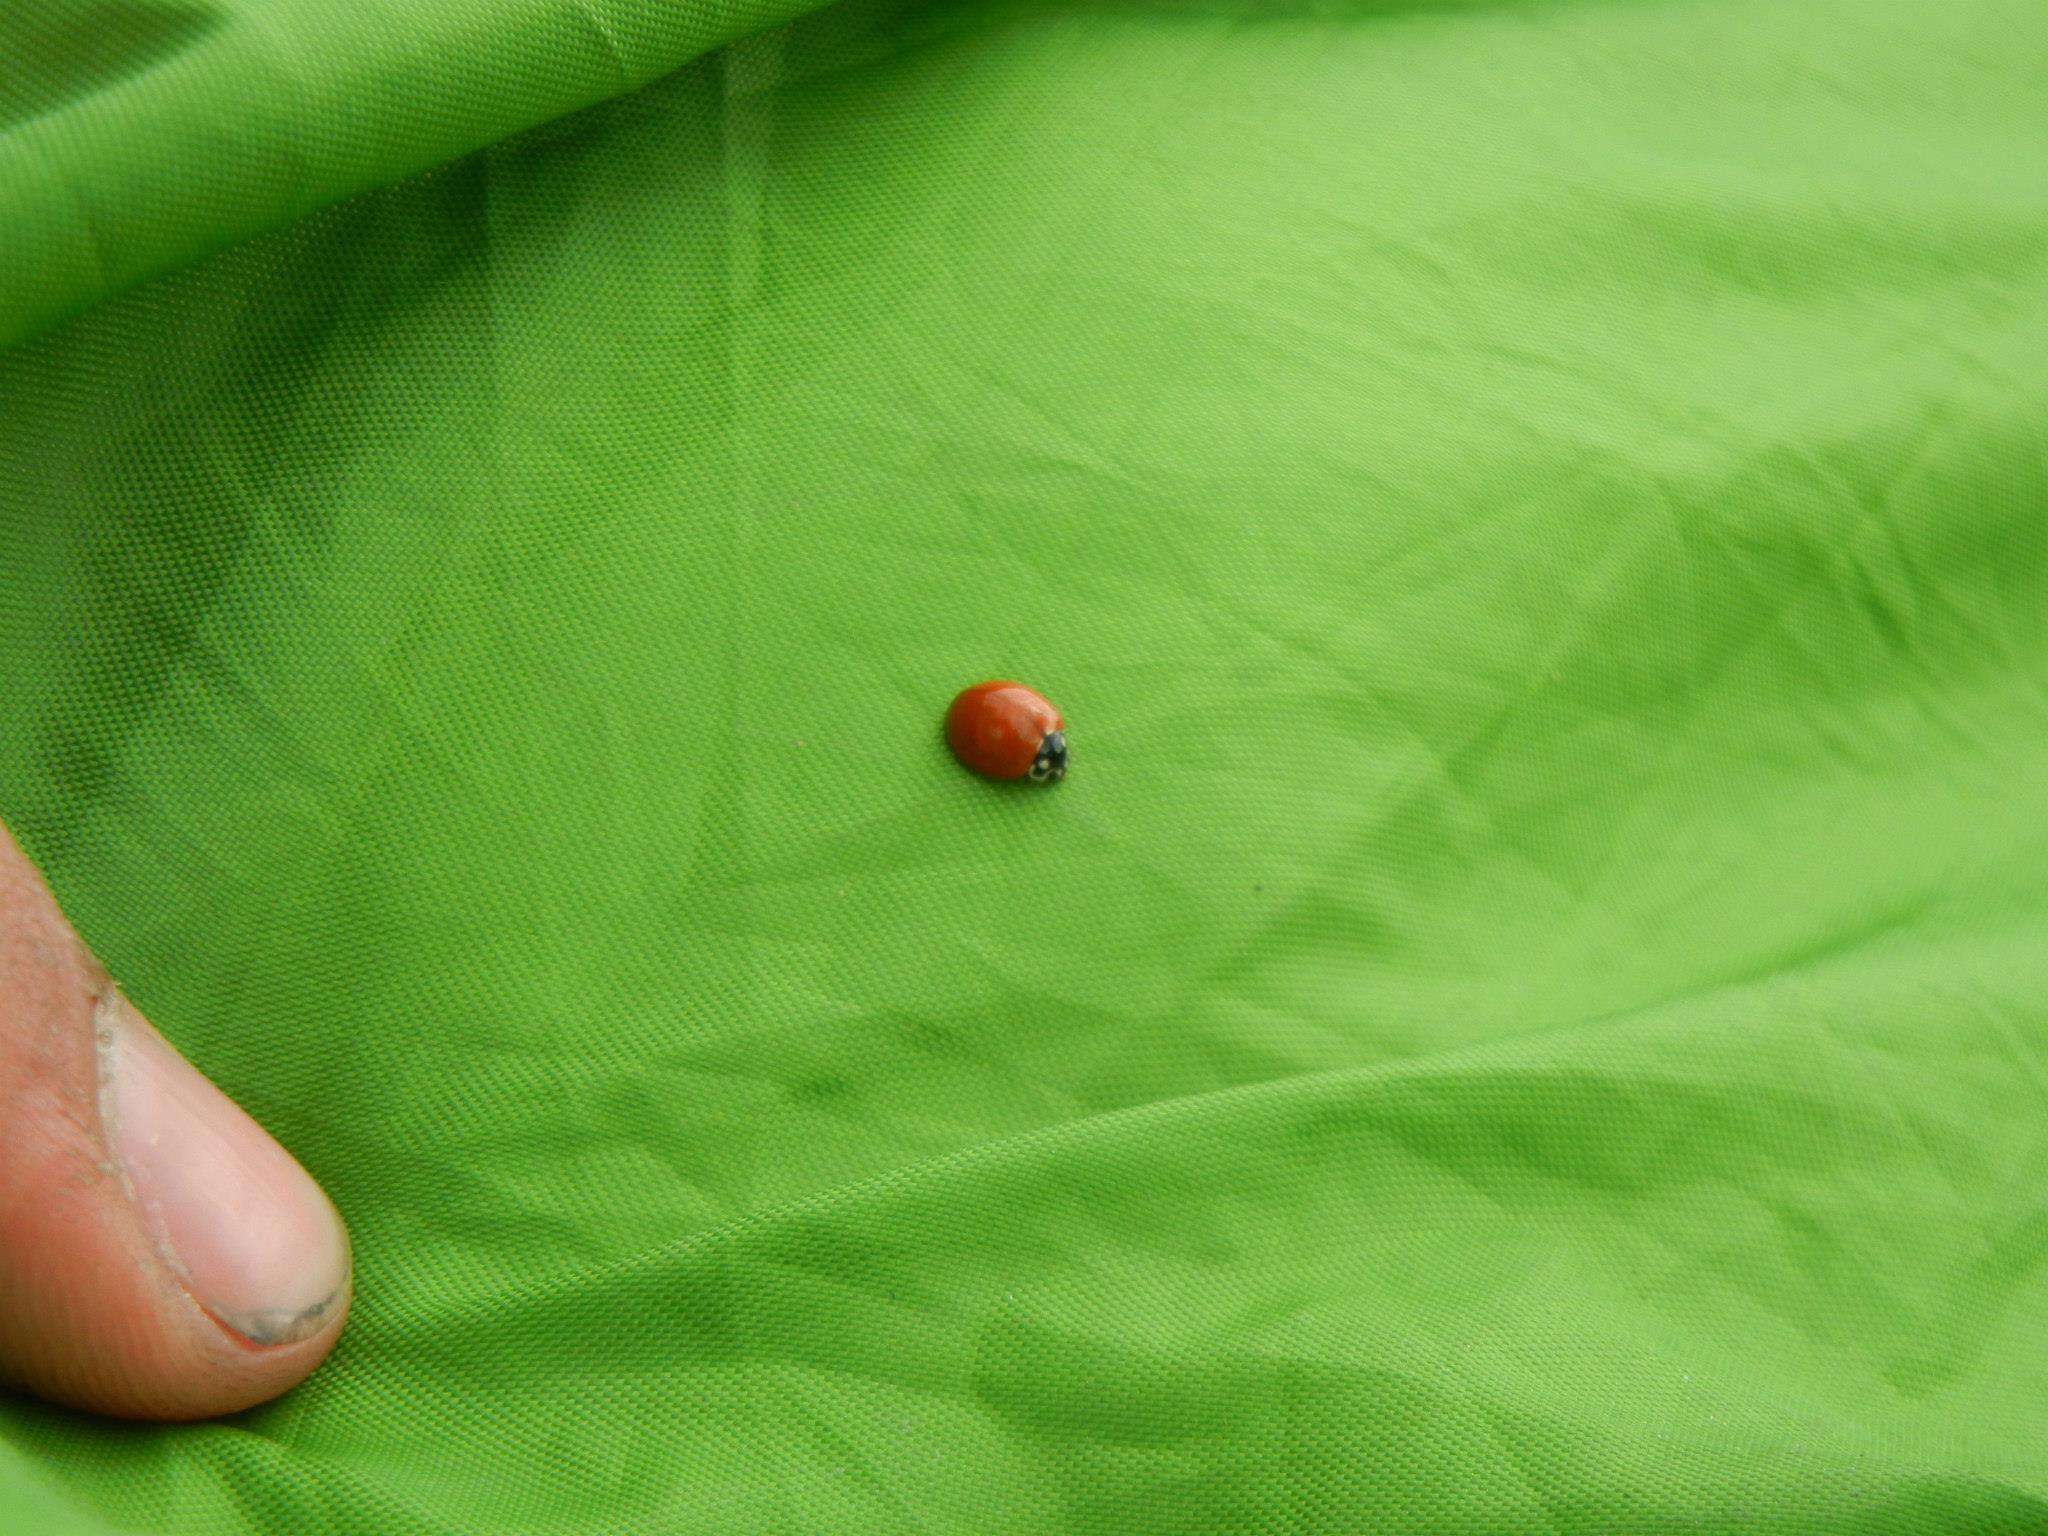 A photo of a ladybug without spots